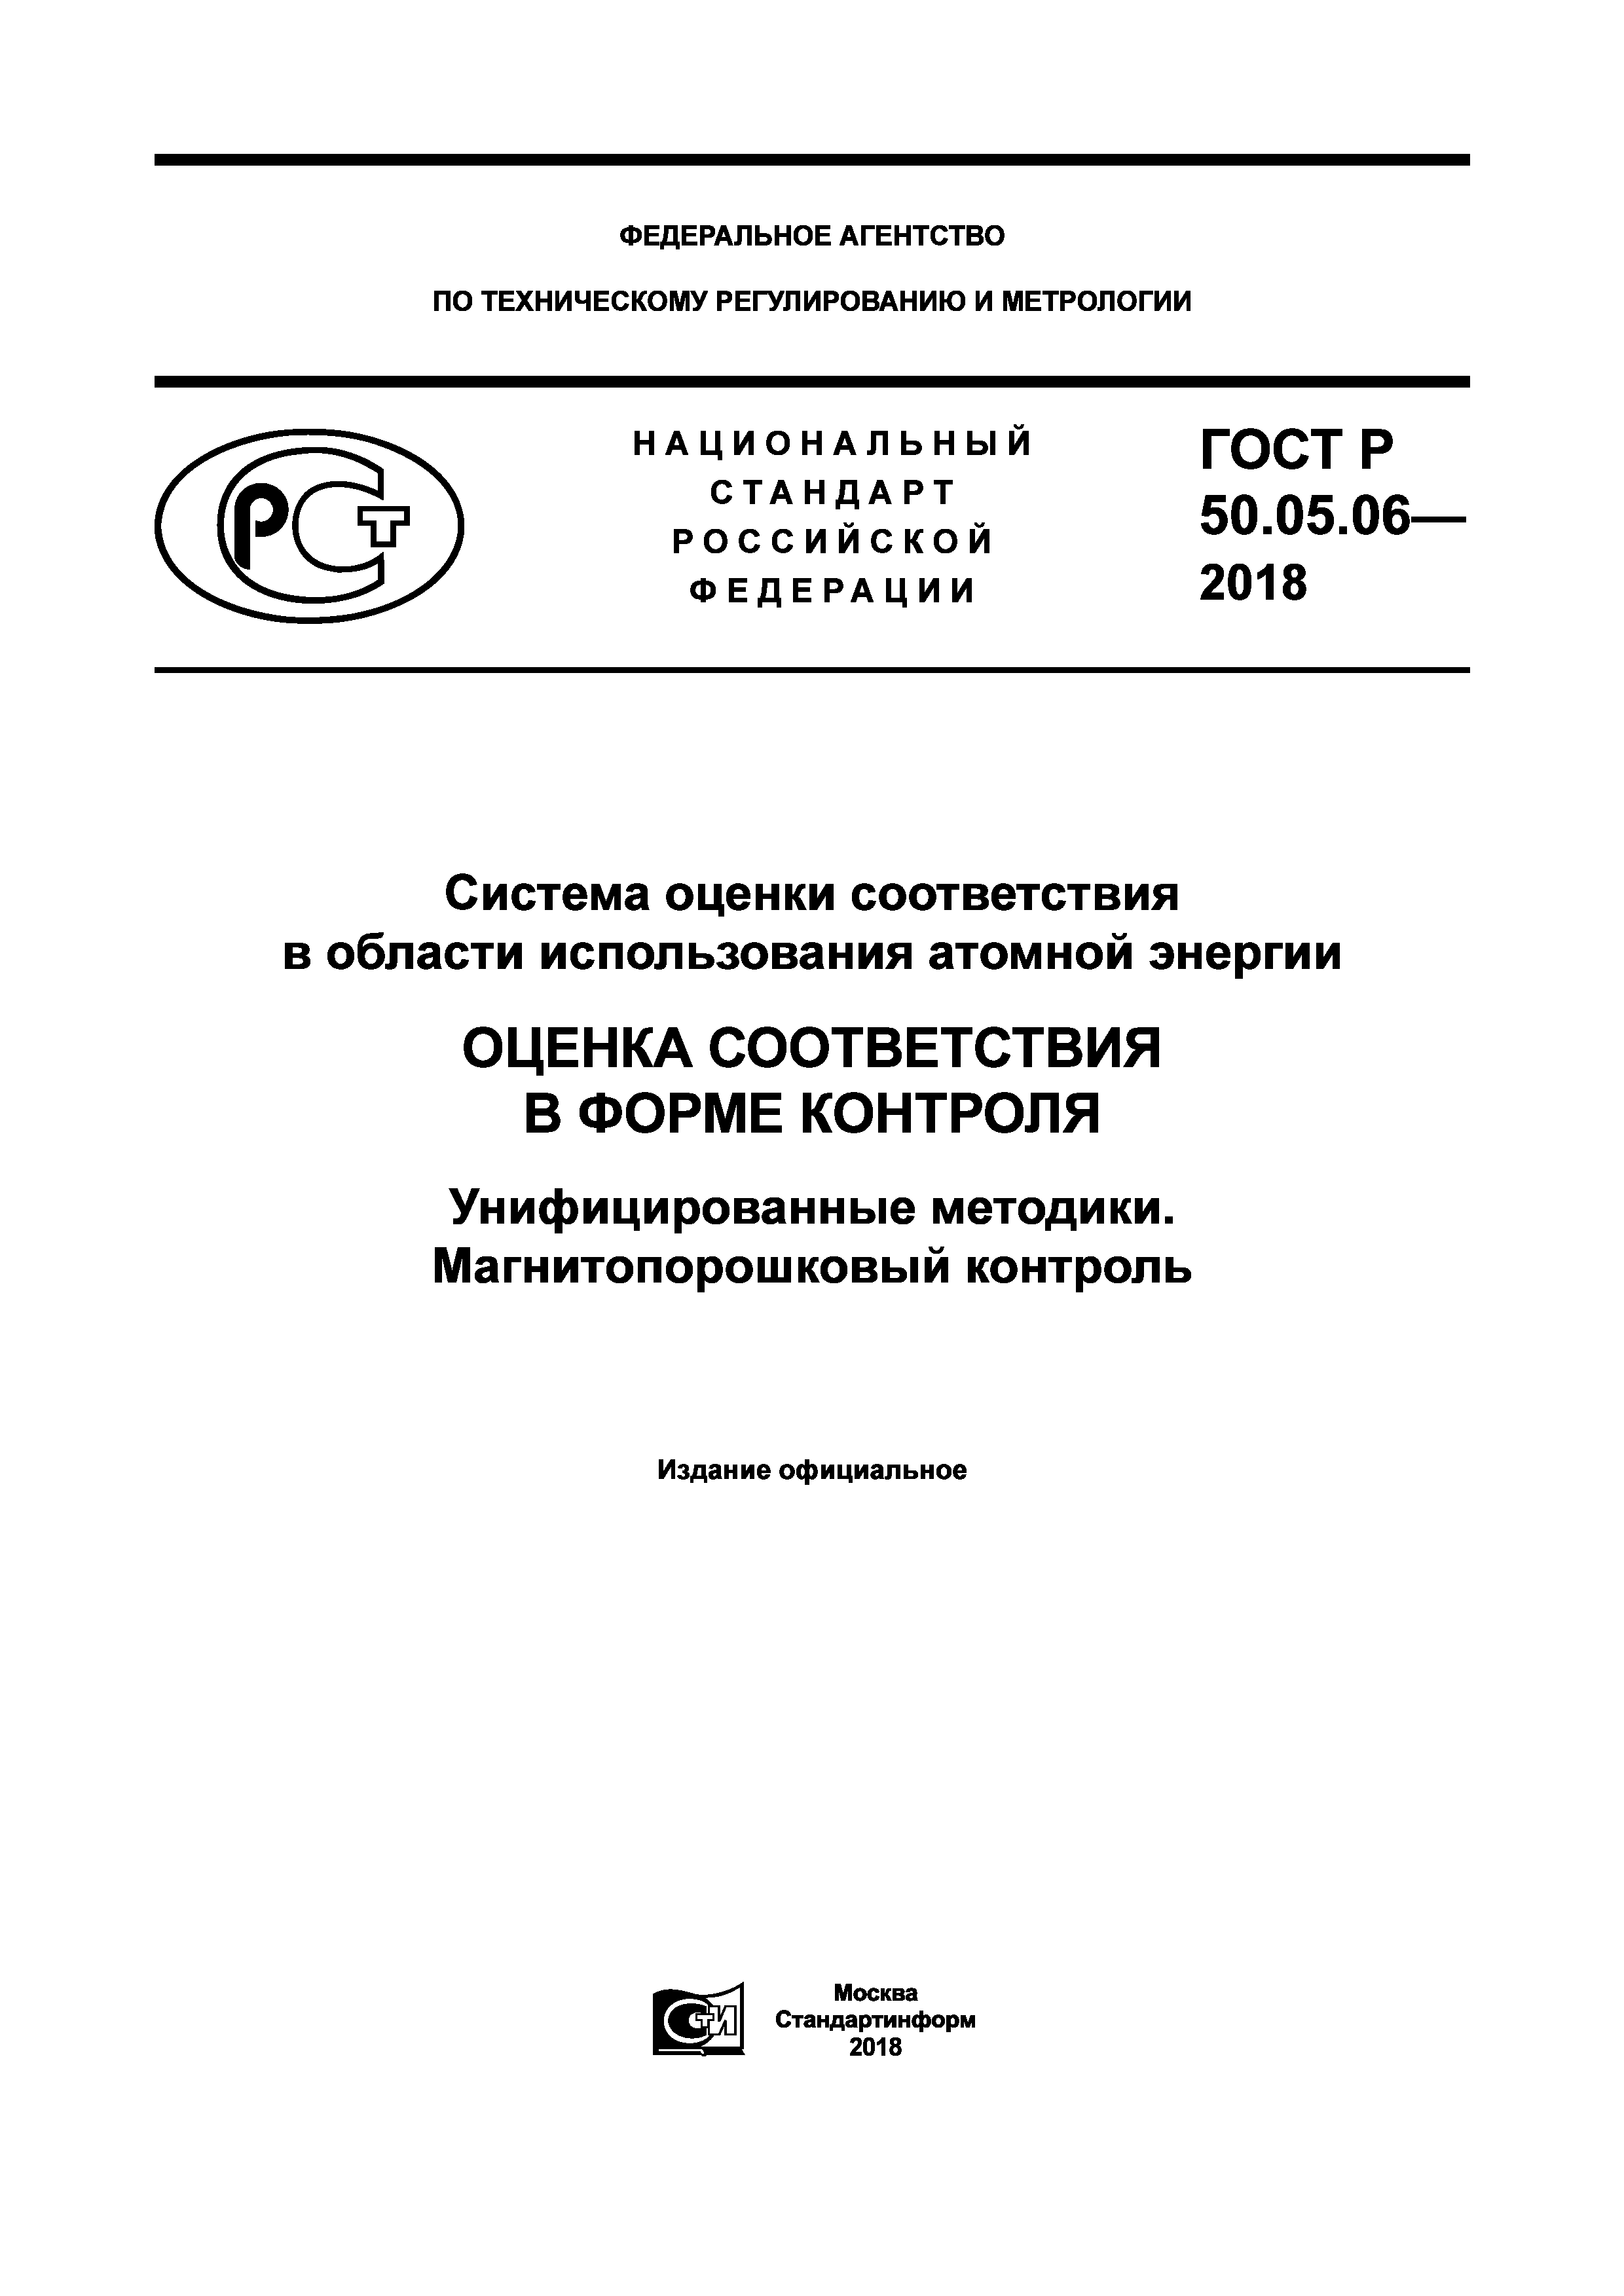 ГОСТ Р 50.05.06-2018